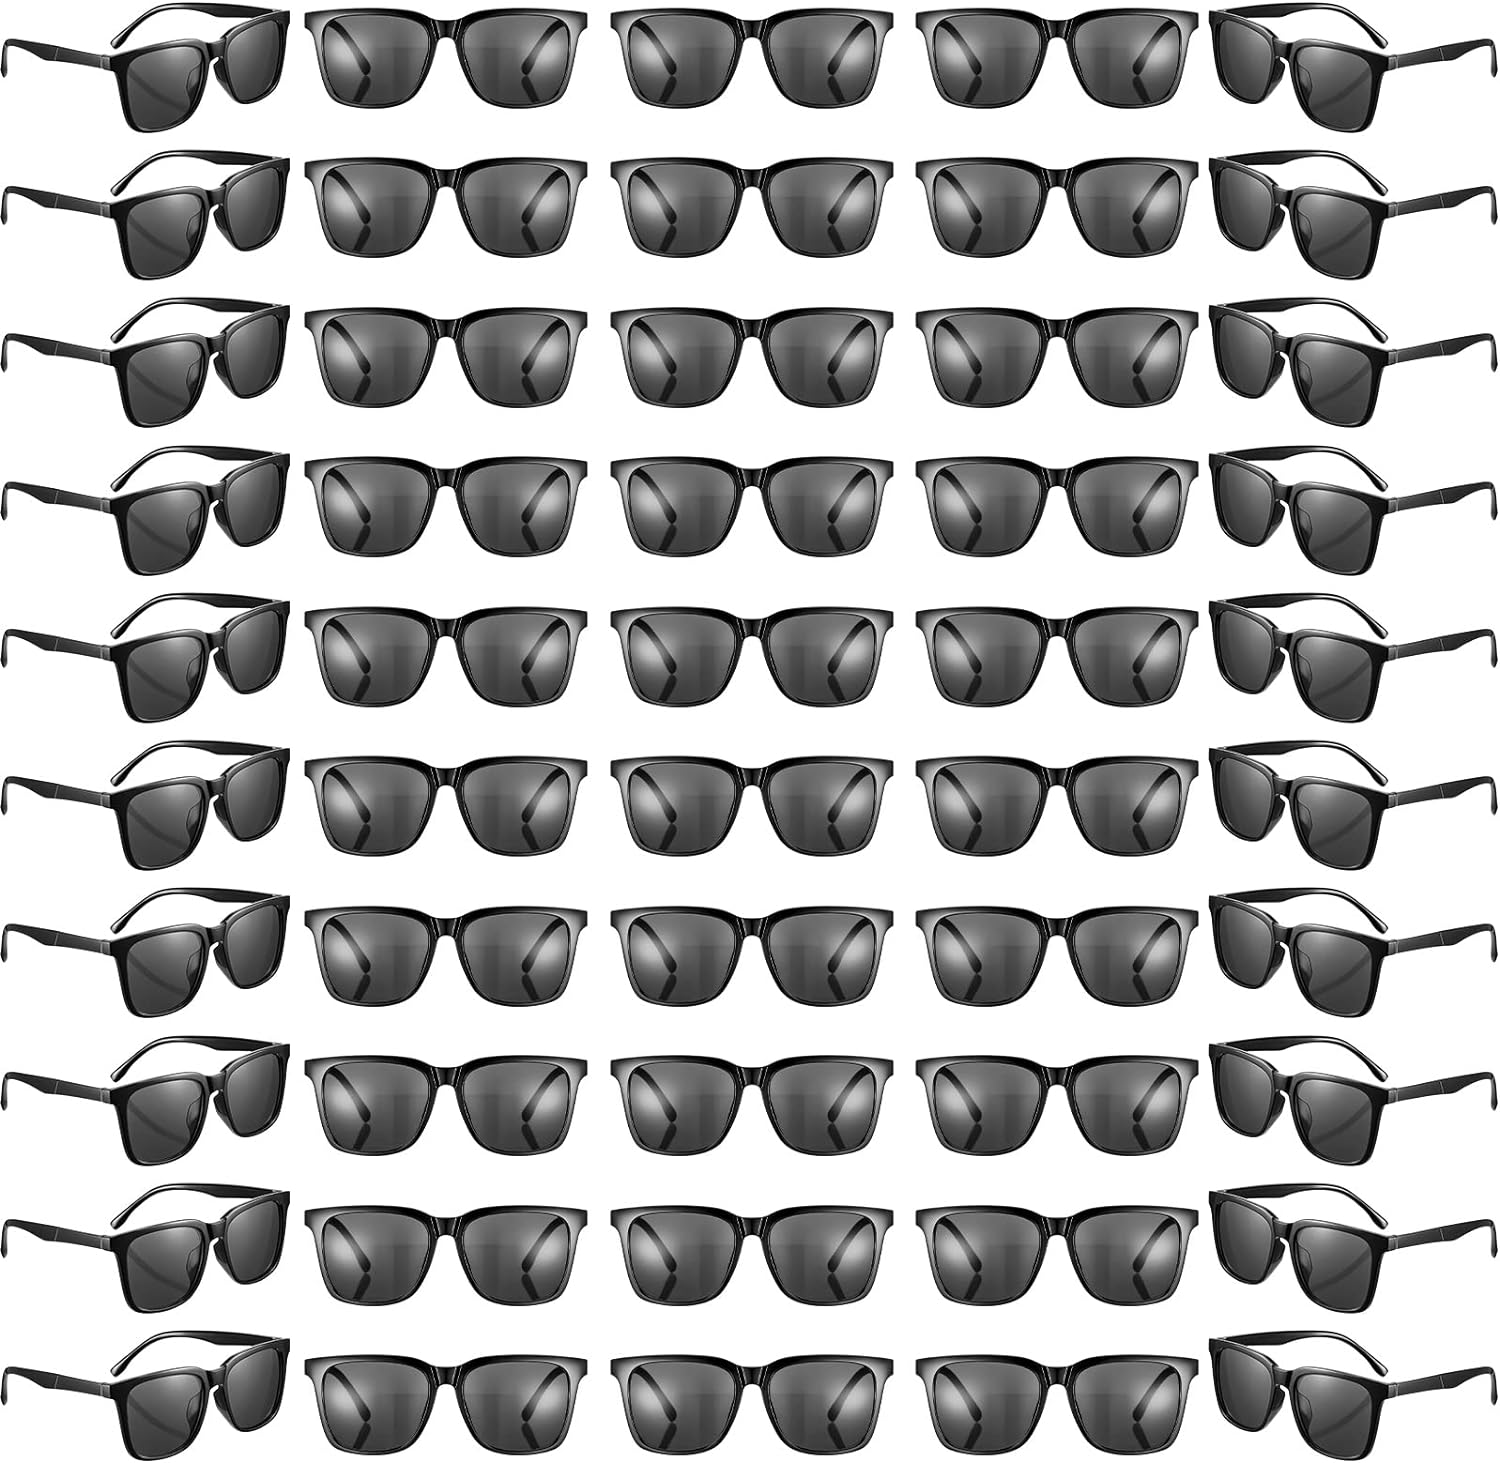 Umigy 50 Pack Sunglasses Bulk Plastic Neon Vintage Retro Sunglasses Party Sunglasses Classic Shades Eyewear for Men Women